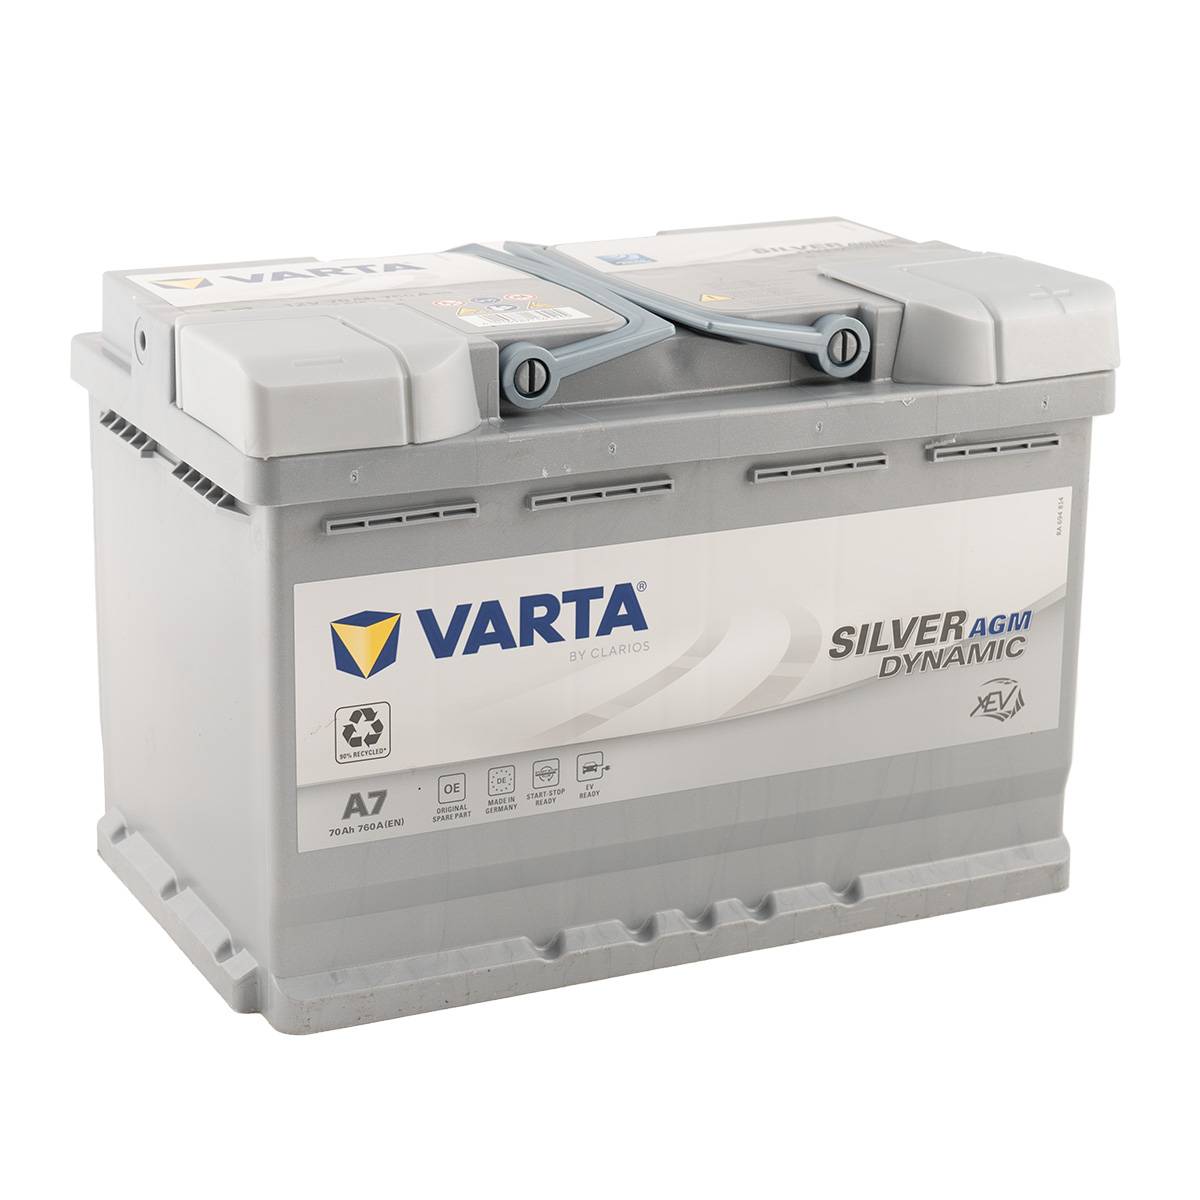 VARTA A7 Silver Dynamic AGM 12V 70Ah 760A Autobatterie Start-Stop 570 901  076, Starterbatterie, Boot, Batterien für